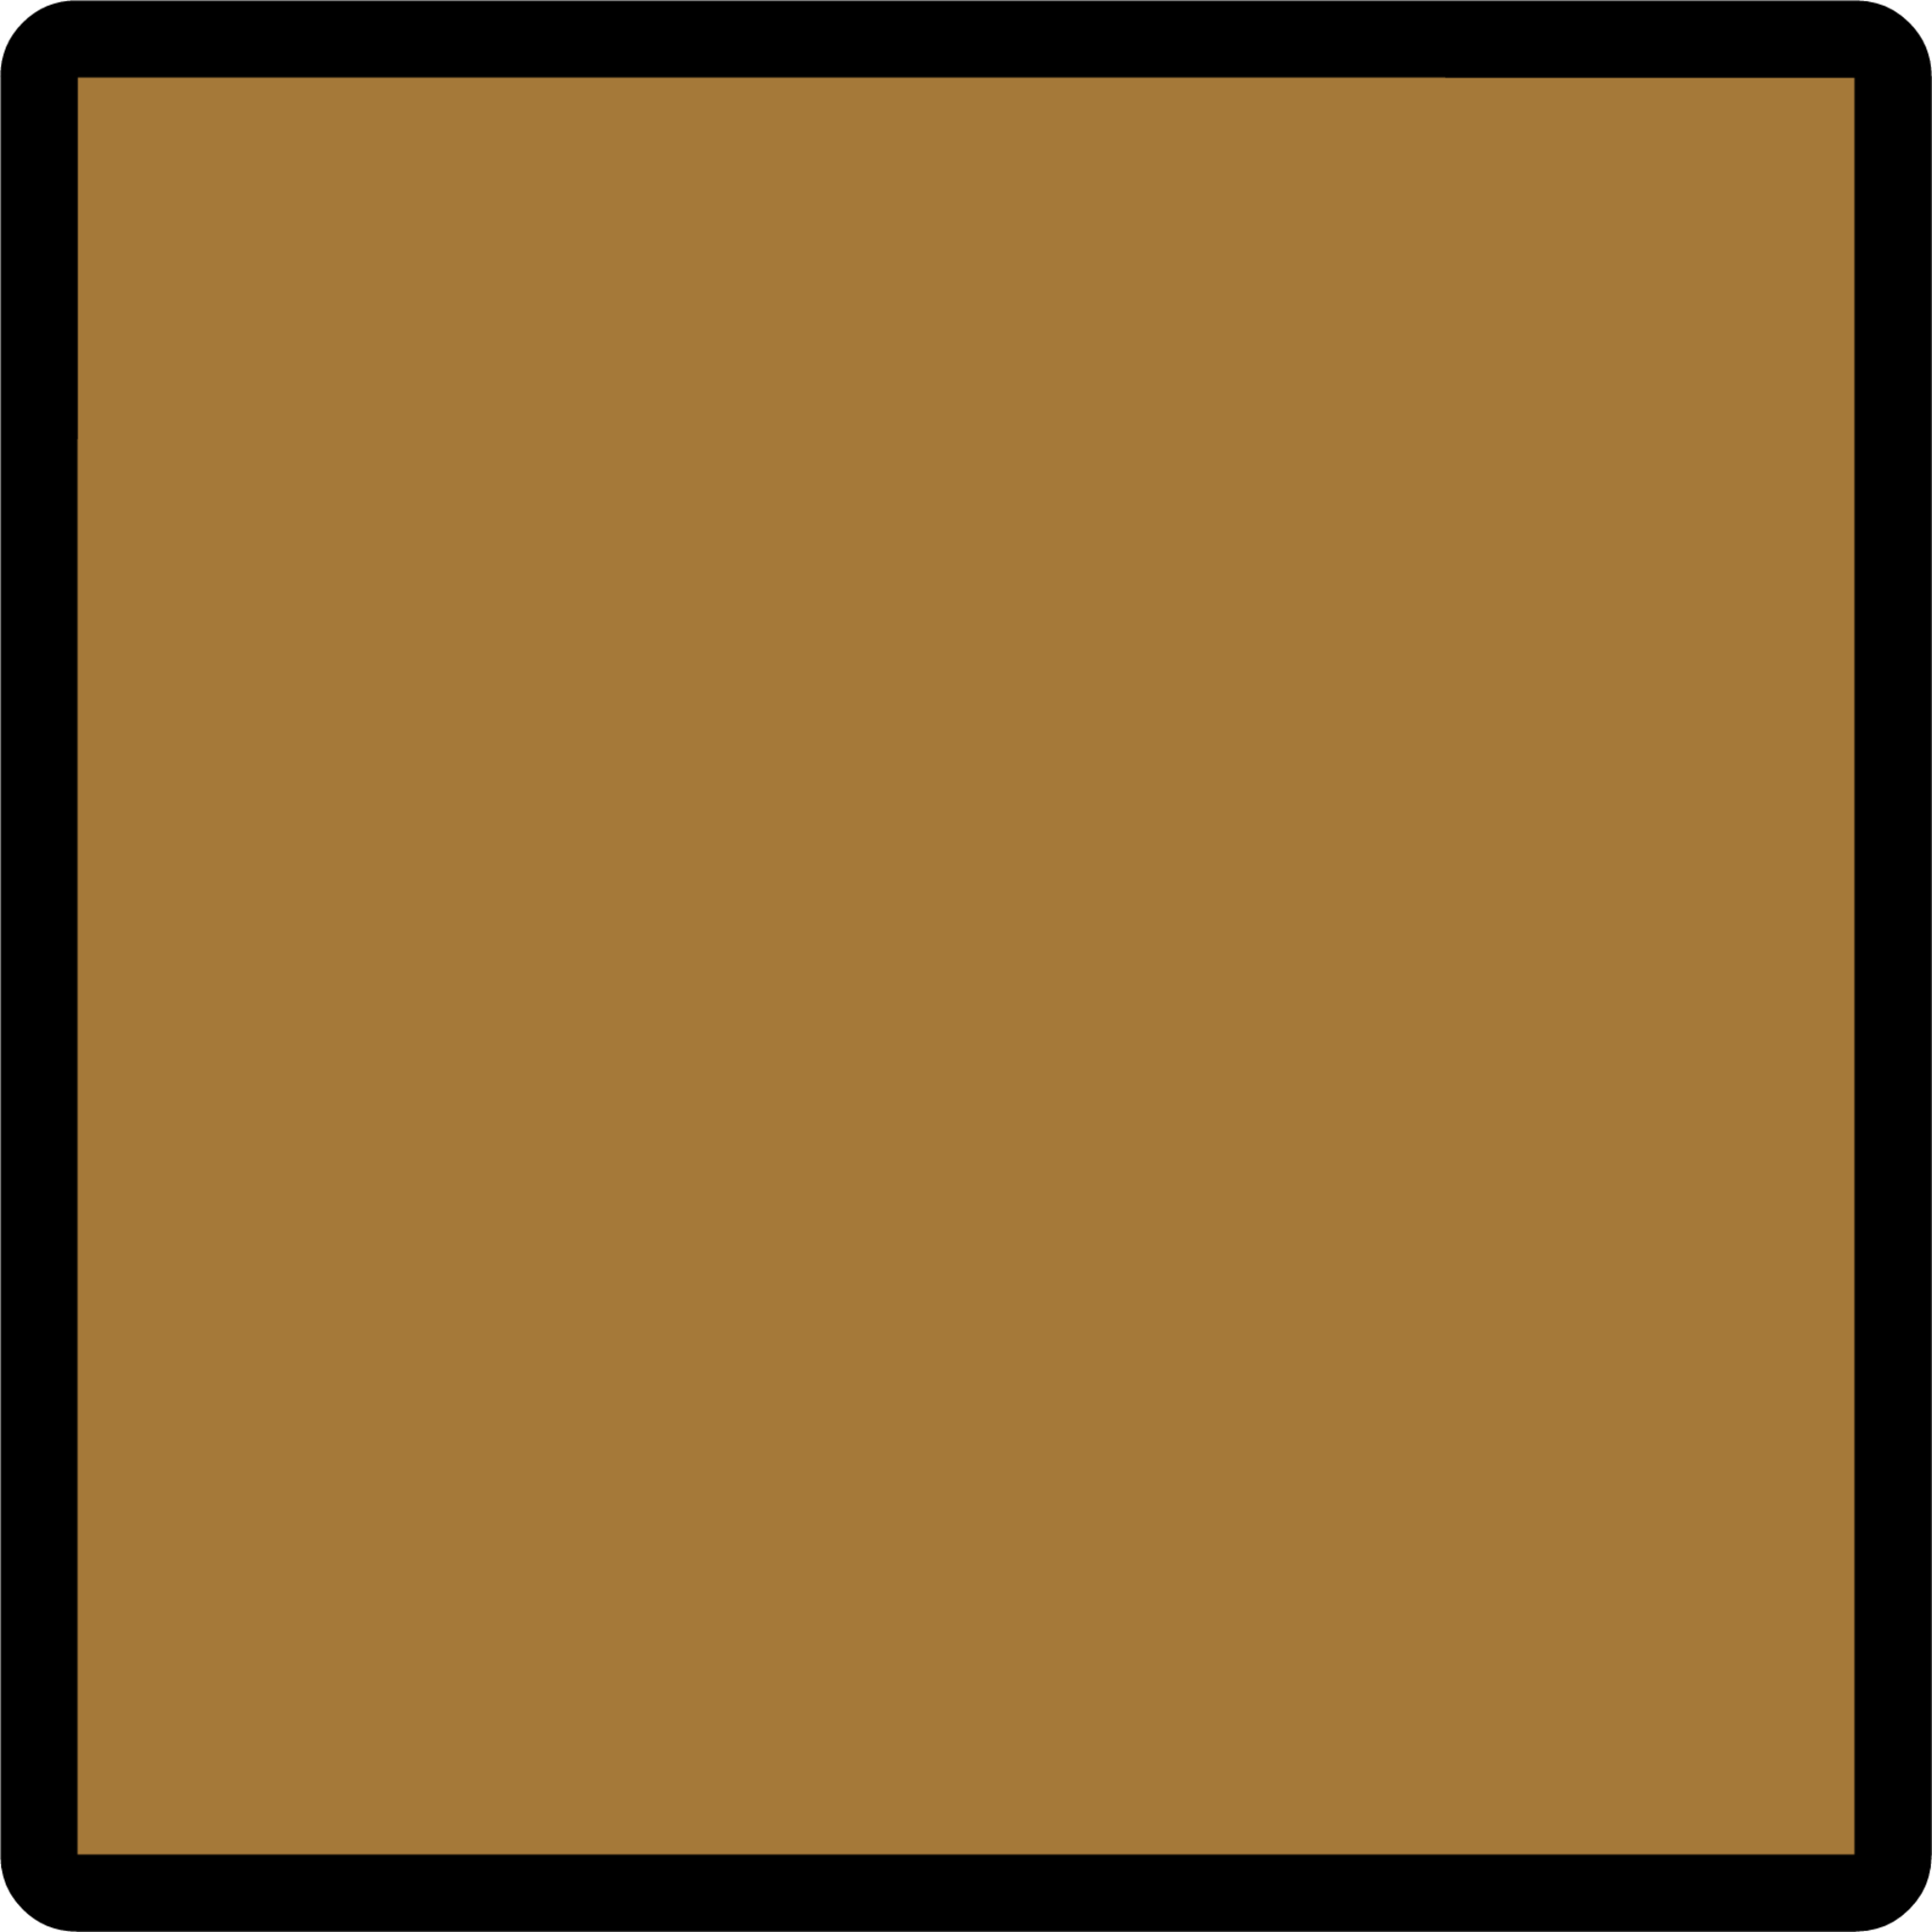 brown square emoji